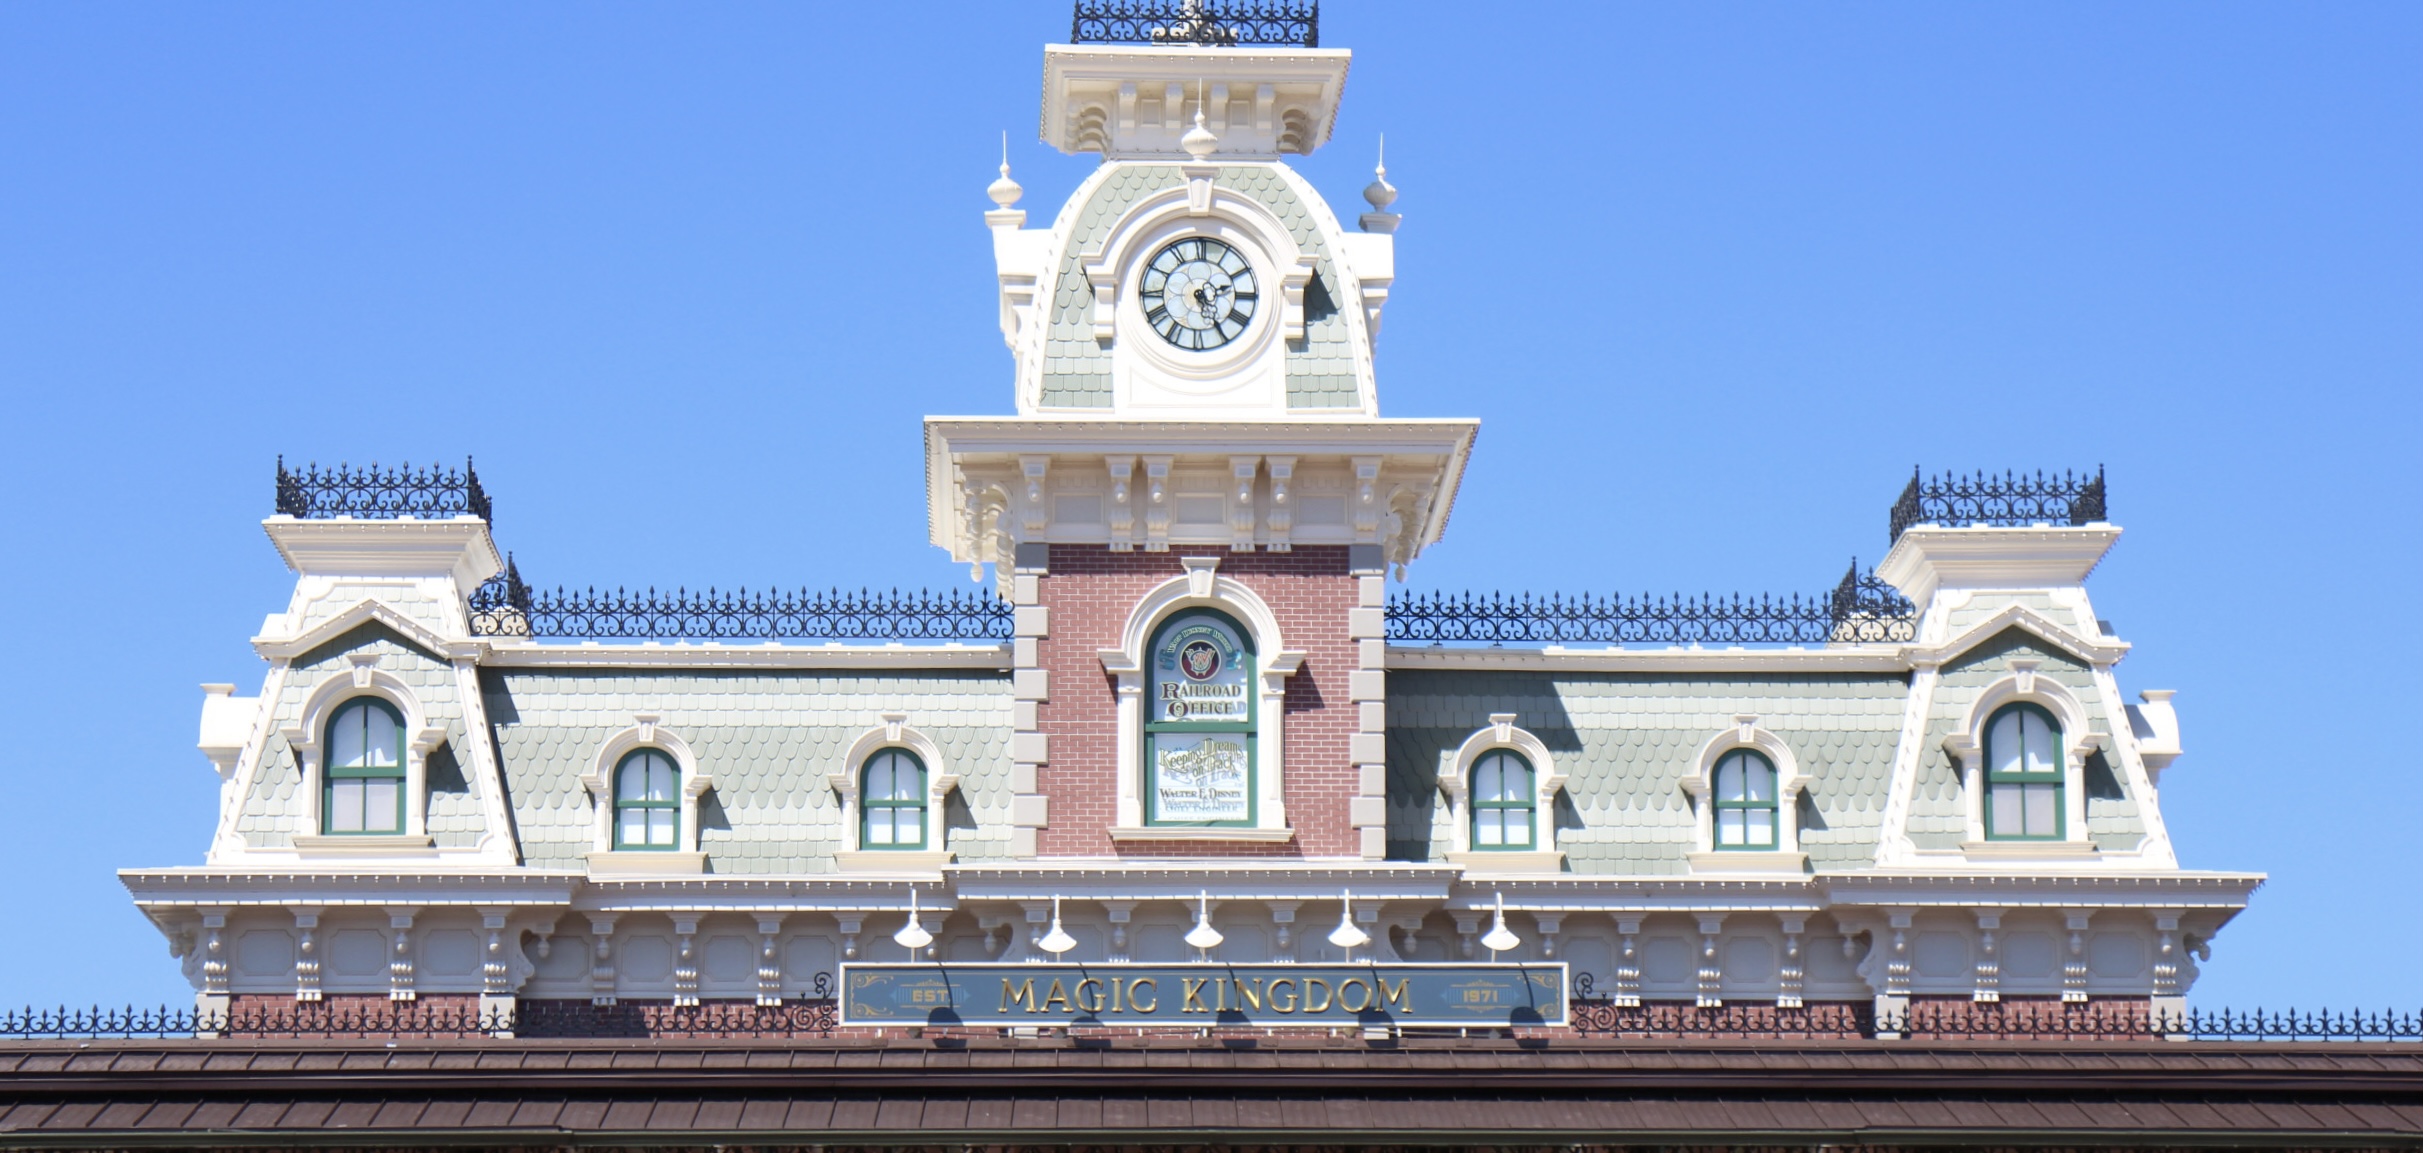 Top half of train station building at Disney theme park Magic Kingdom